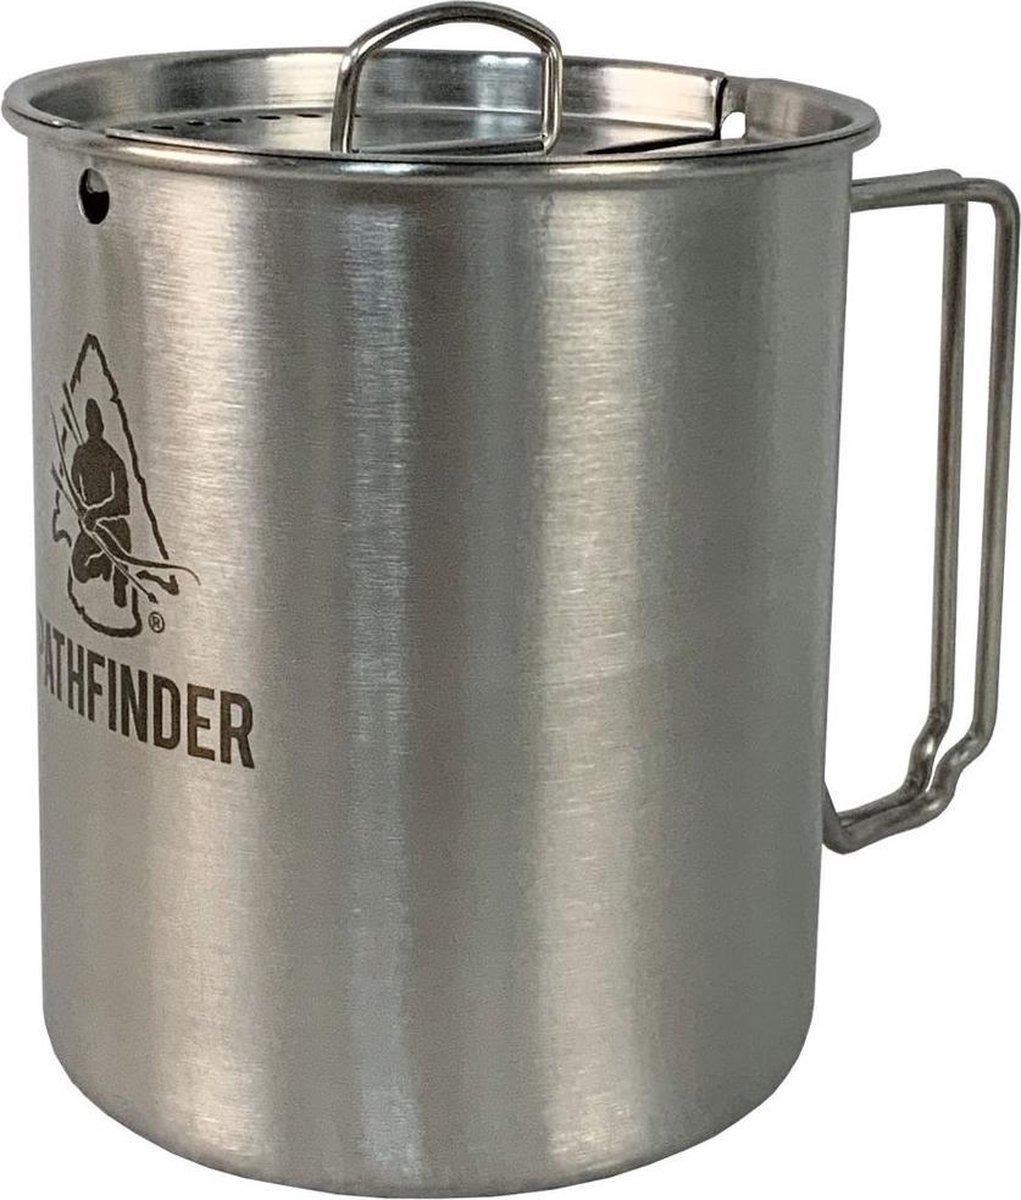 Pathfinder - Stainless Steel 25 oz. Cup & Lid